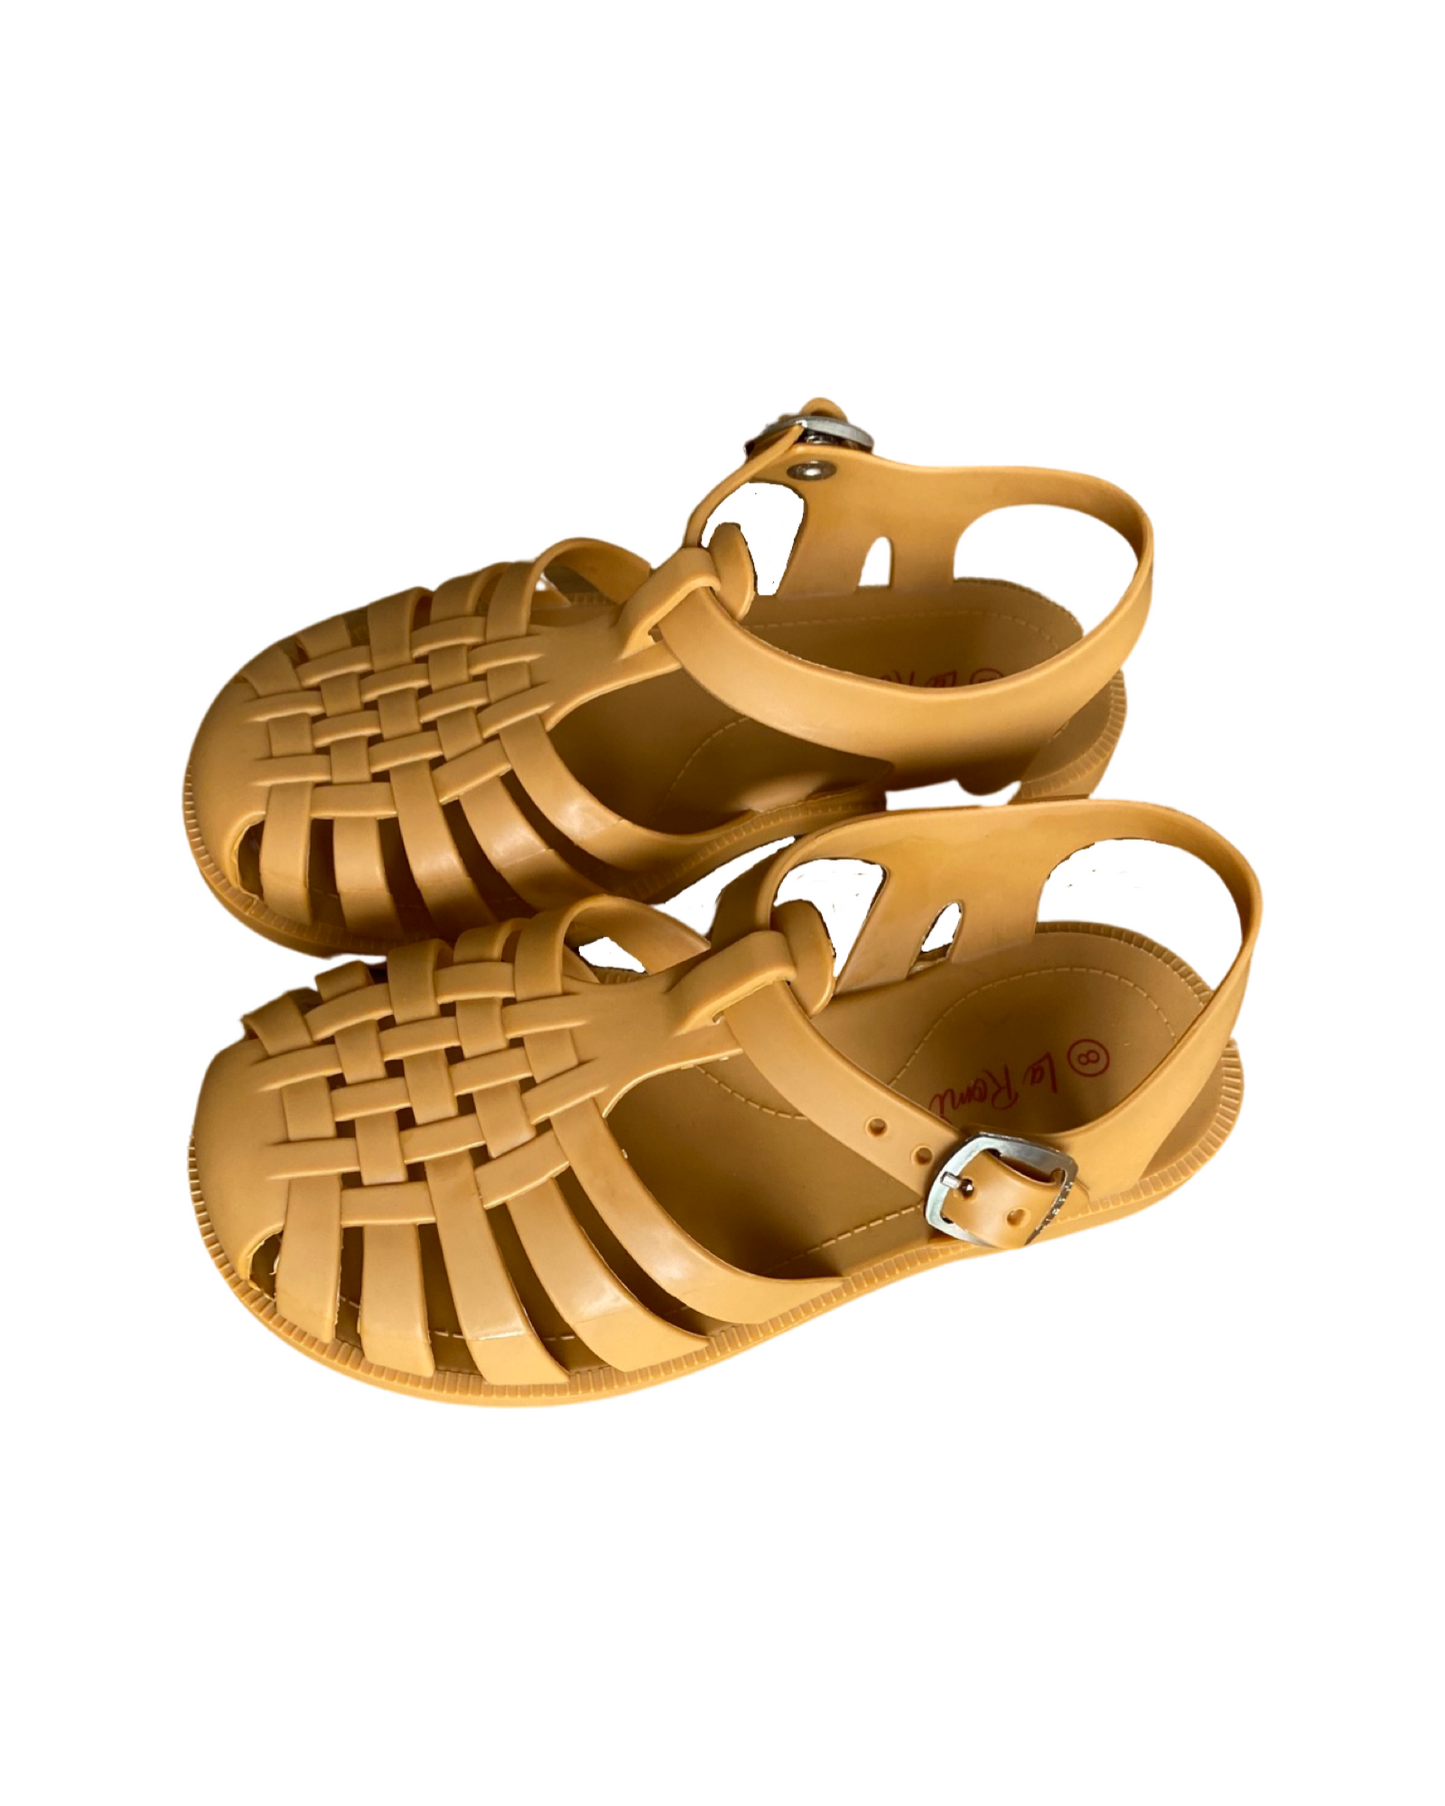 La Romi jelly sandals